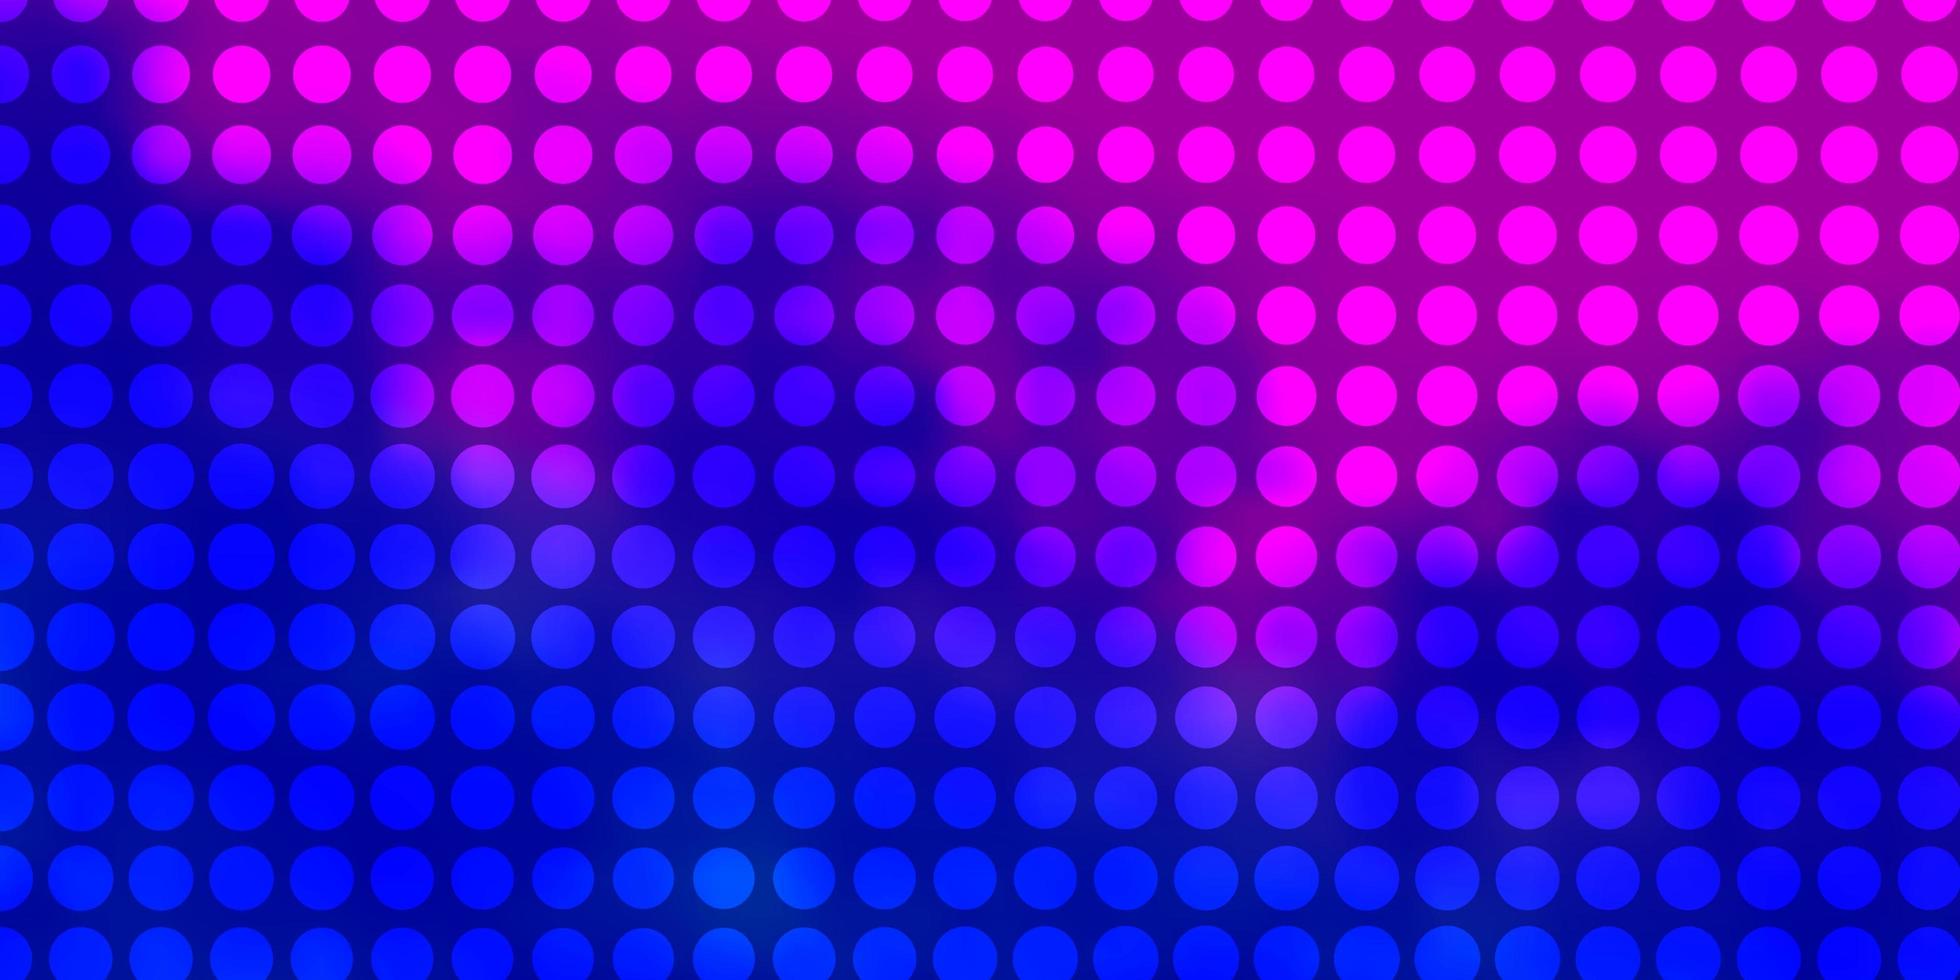 textura de vetor rosa claro, azul com círculos.